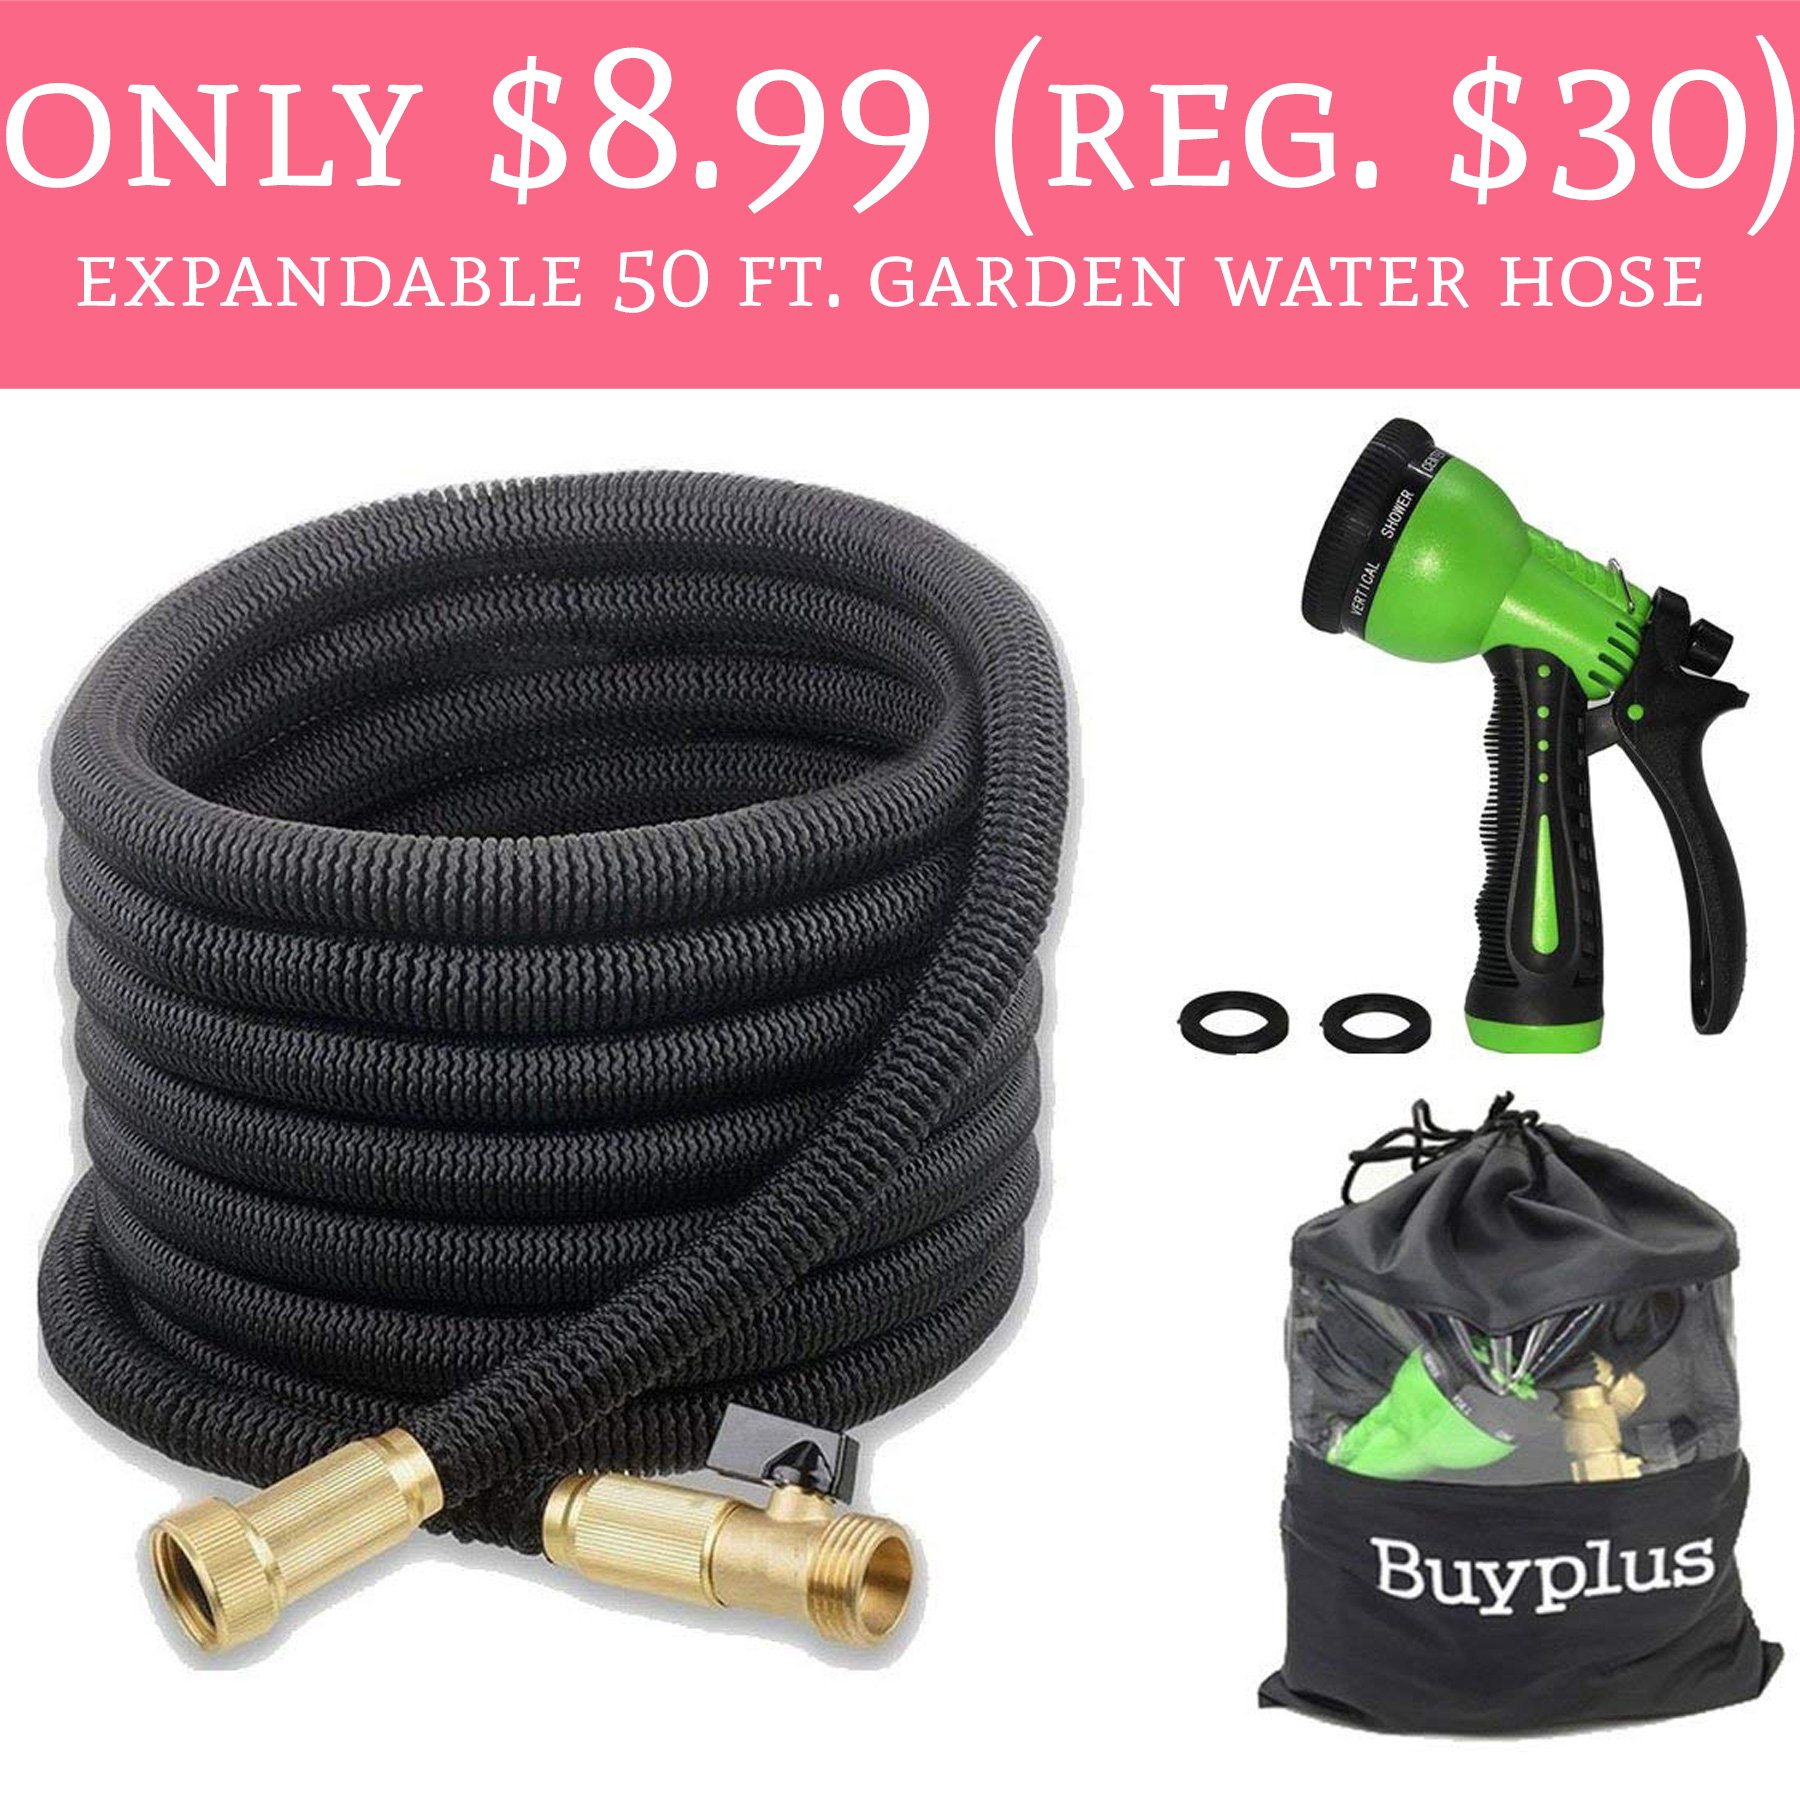 expandable-50-foot-garden-water-hose